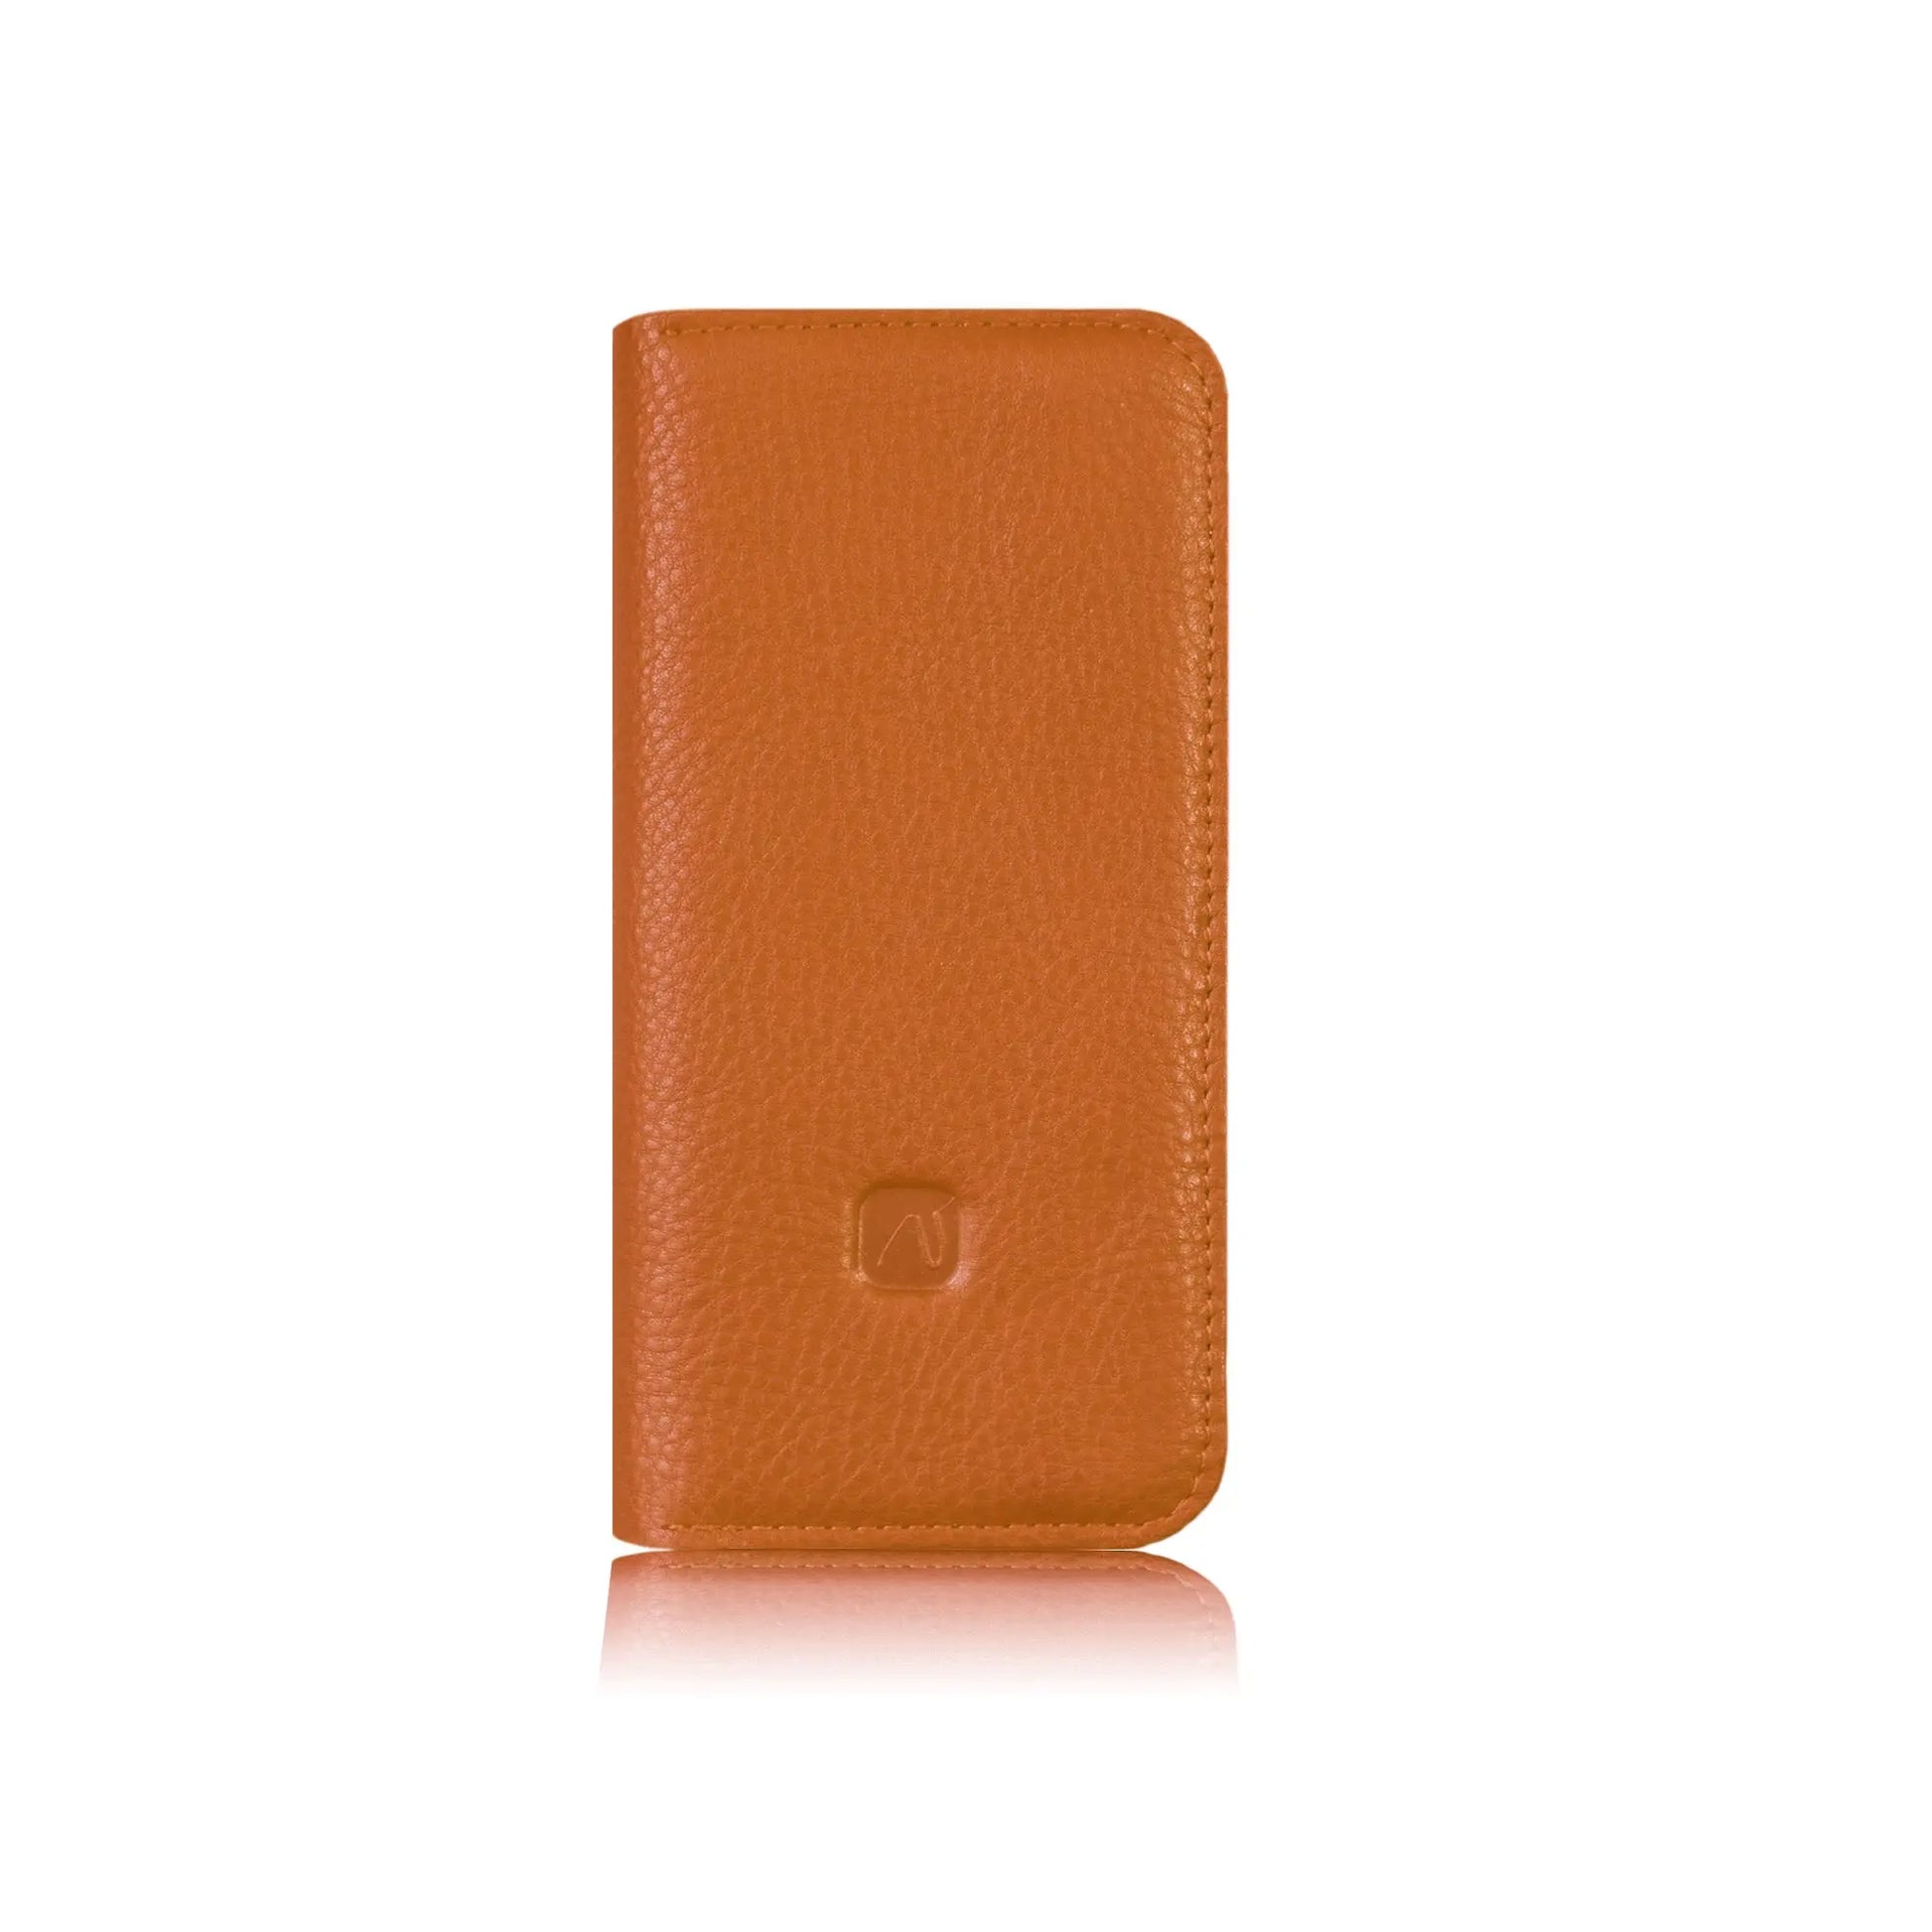 orangefarbenes Cover für Handys aus Rindsleder mit Vandebag Logoprägung